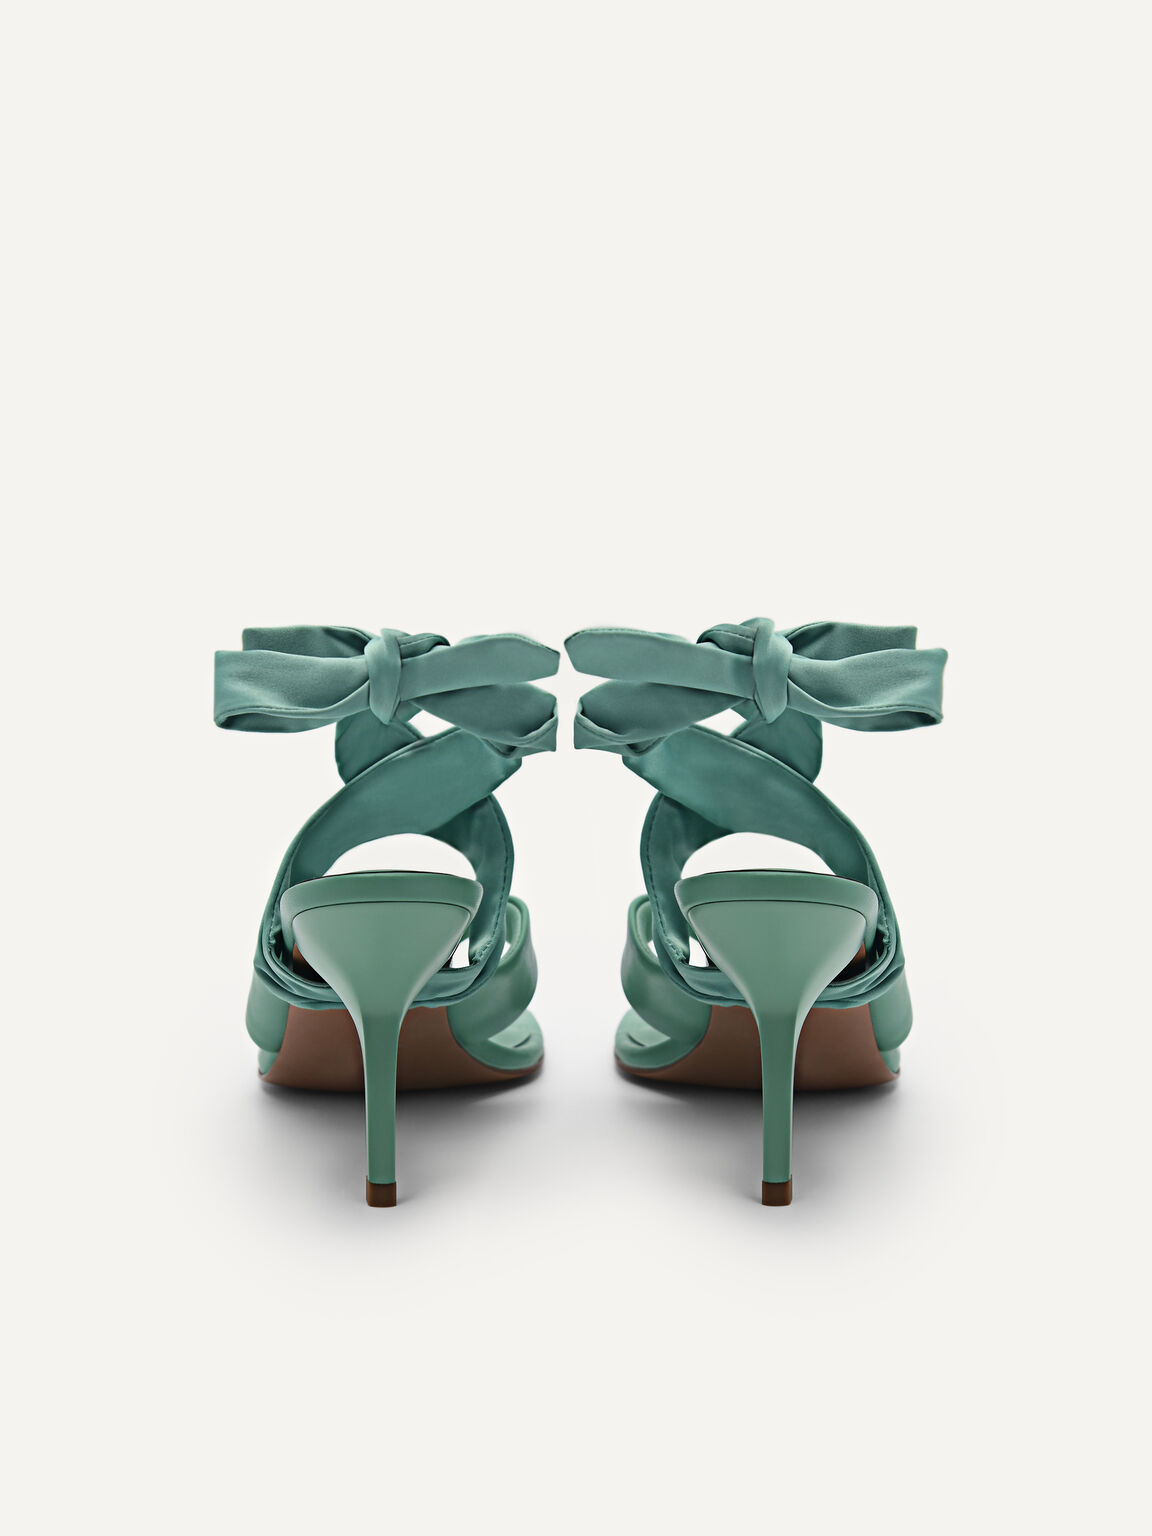 Green Carolyn Heel Sandals - PEDRO BN